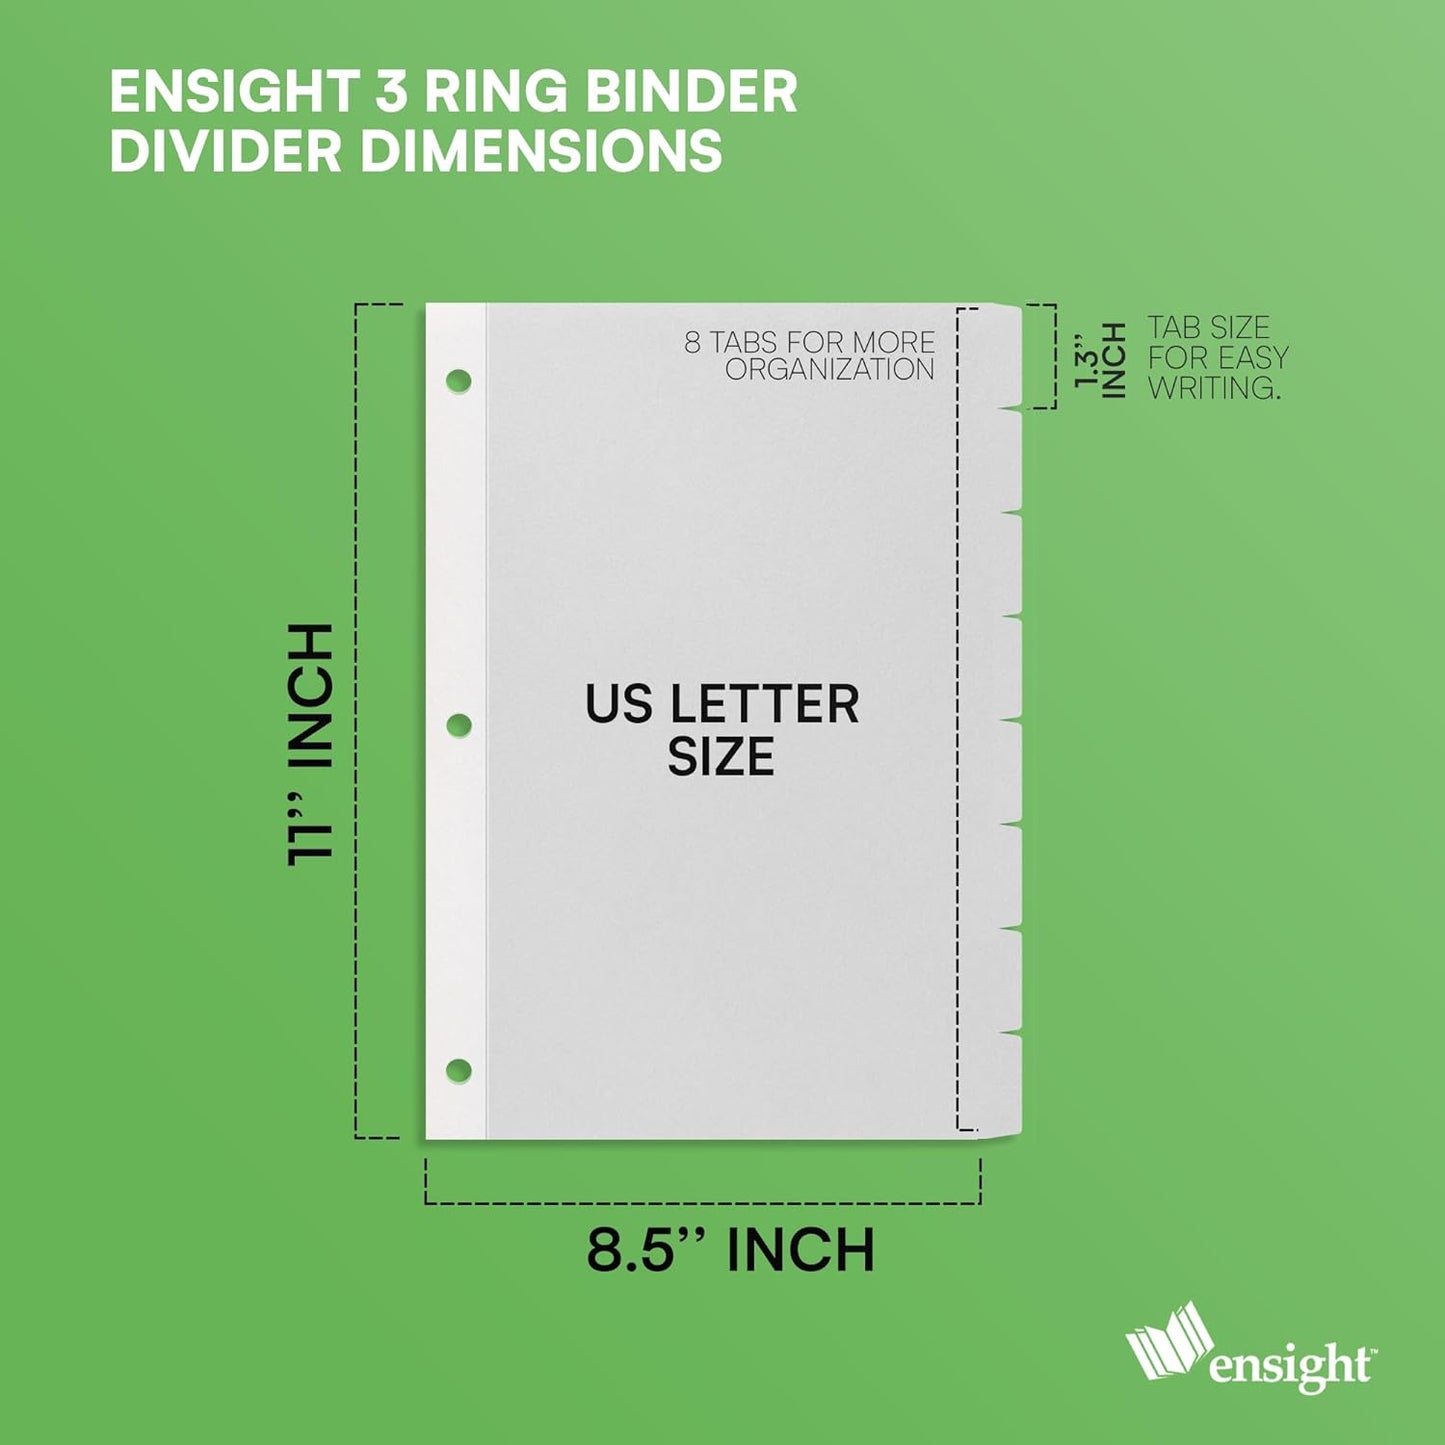 3 Ring Page Dividers Bulk, 1/8 Cut Tab Dividers, 96 Per Box - Divider Pages with Tabs, Decorative Printable Rewritable Divider Tabs, Exhibit Tab Dividers for 3 Ring Binders Bulk - Ensight